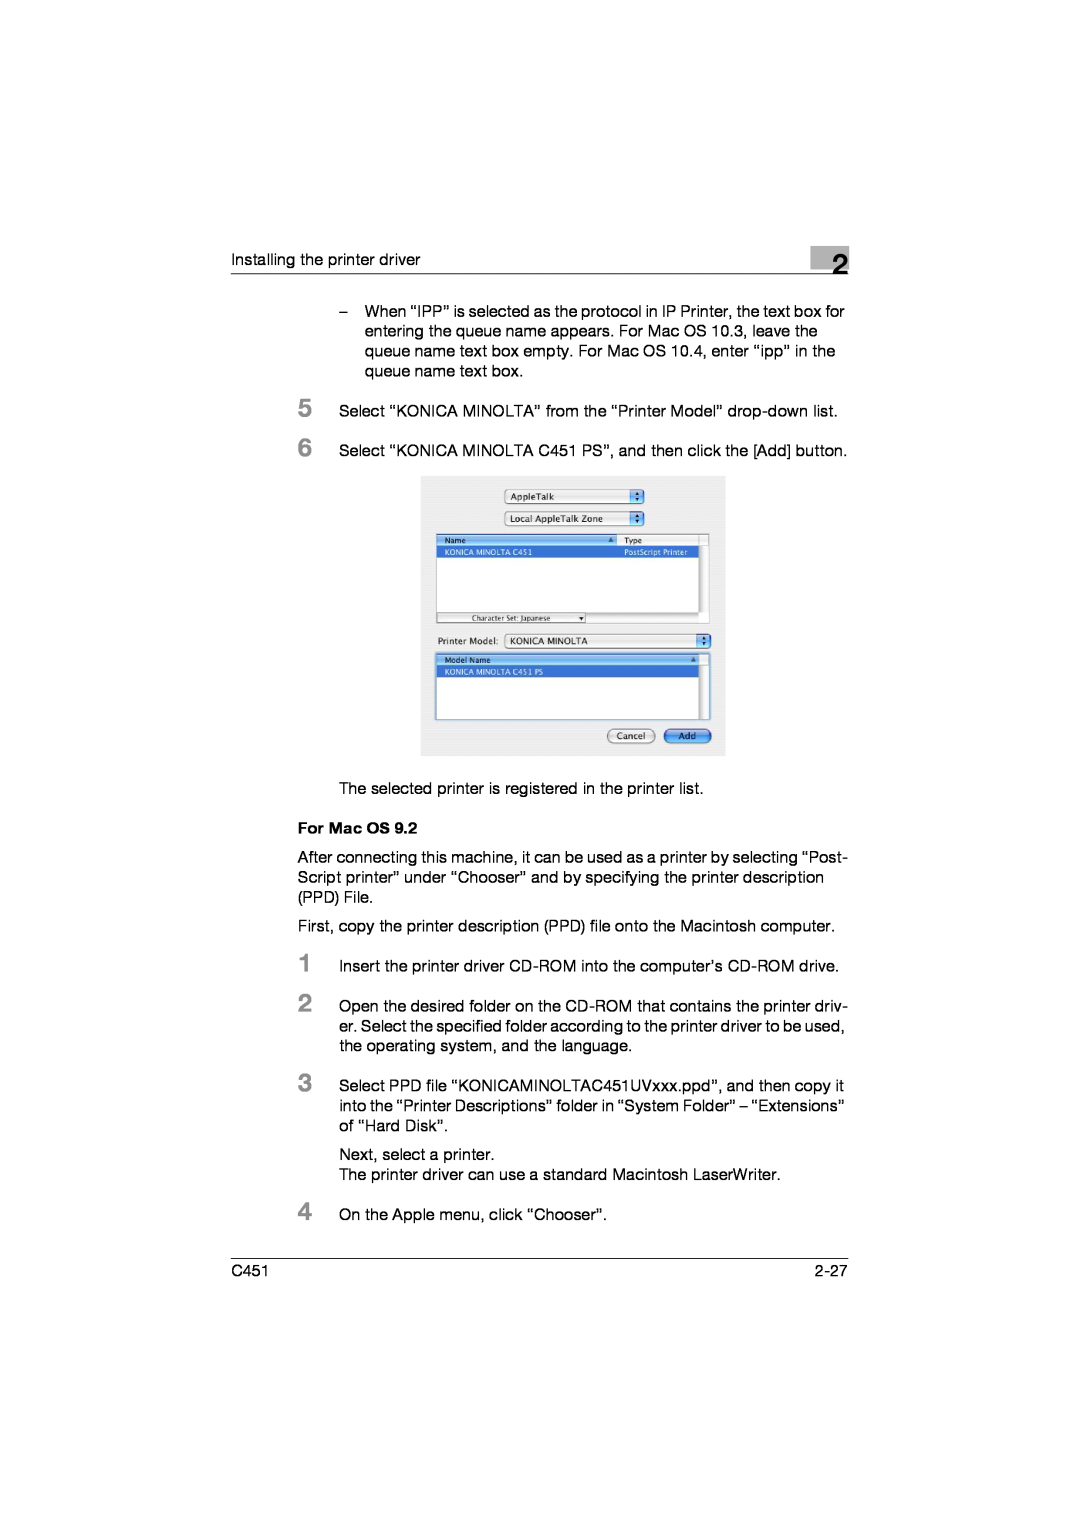 Konica Minolta C451 manual For Mac OS 